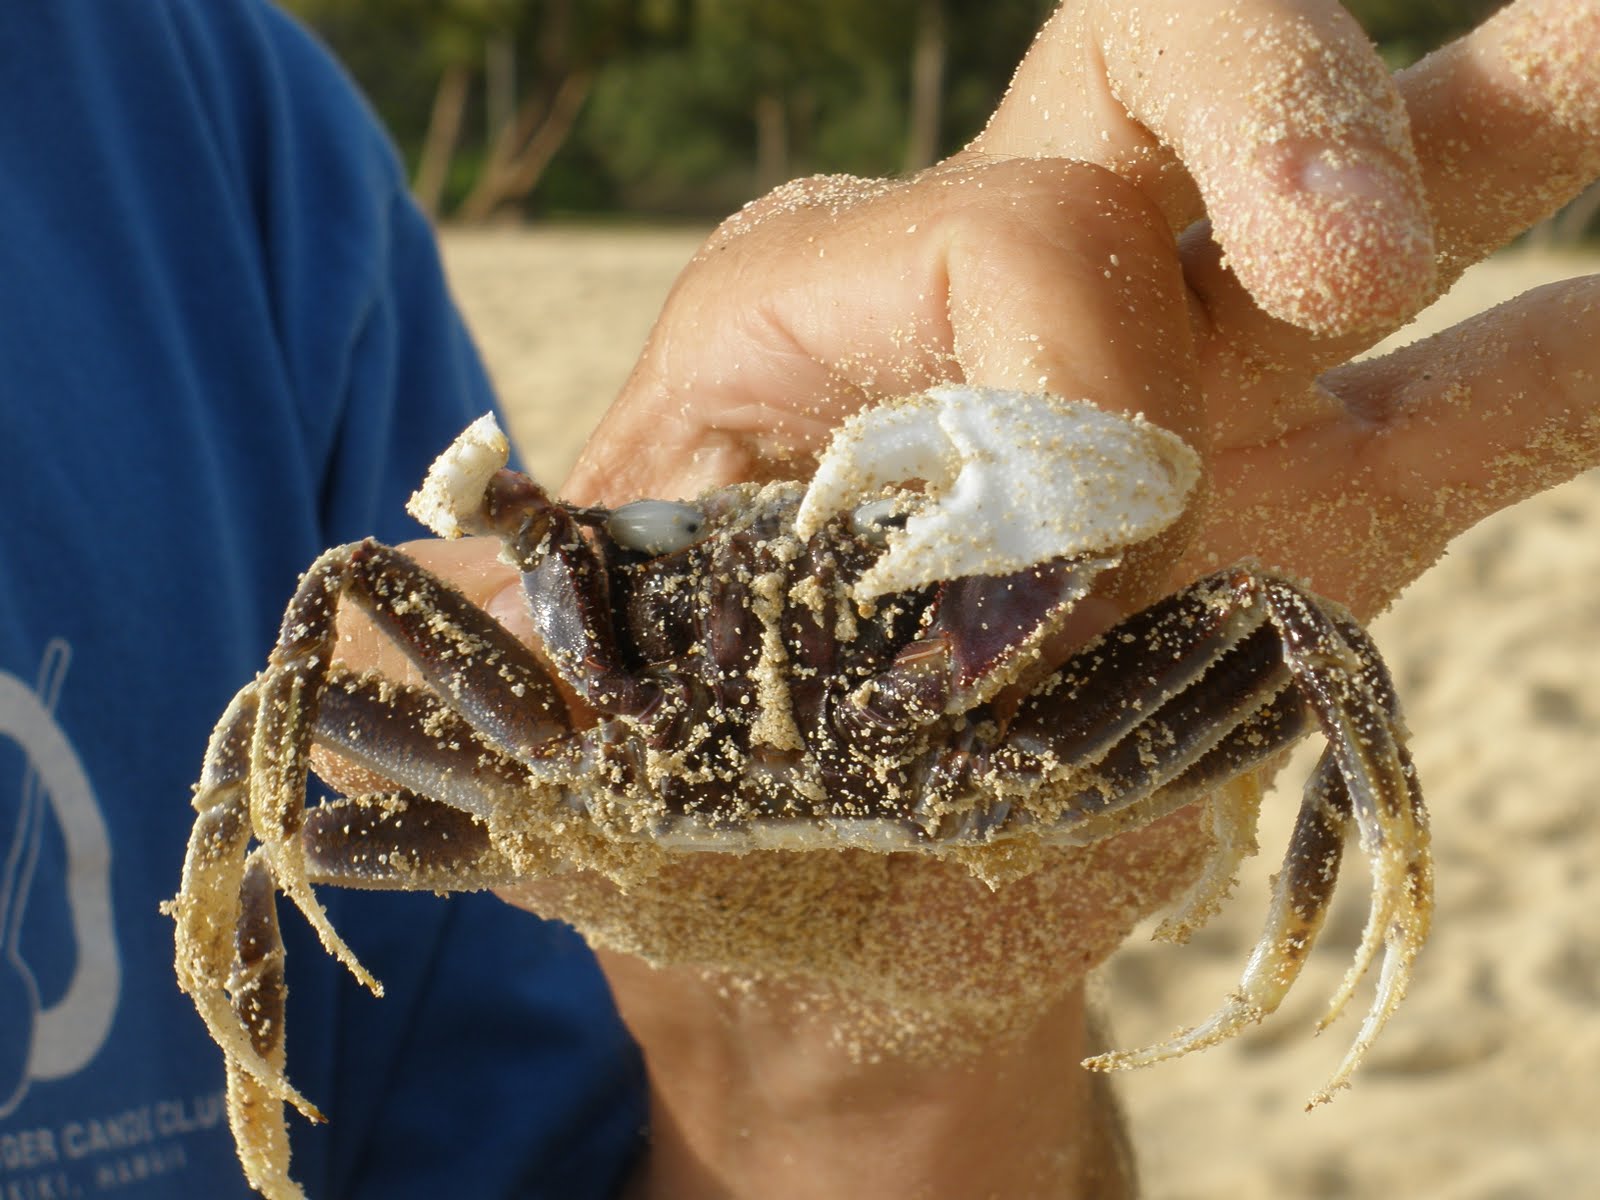 The Hagerman Ohana Sand Crabs